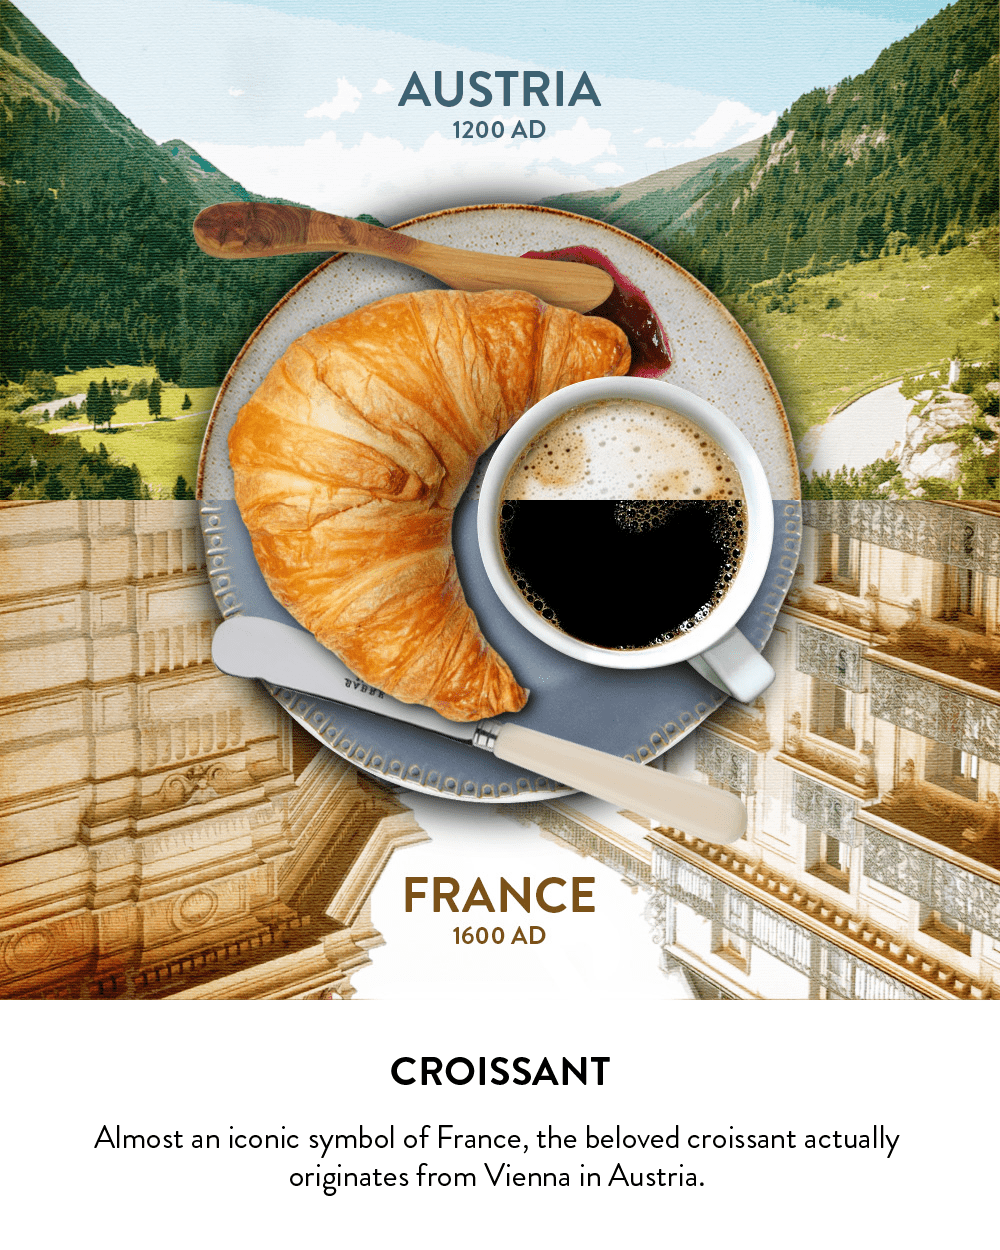 Surprising Food Origins - The Croissant - CDA Appliances